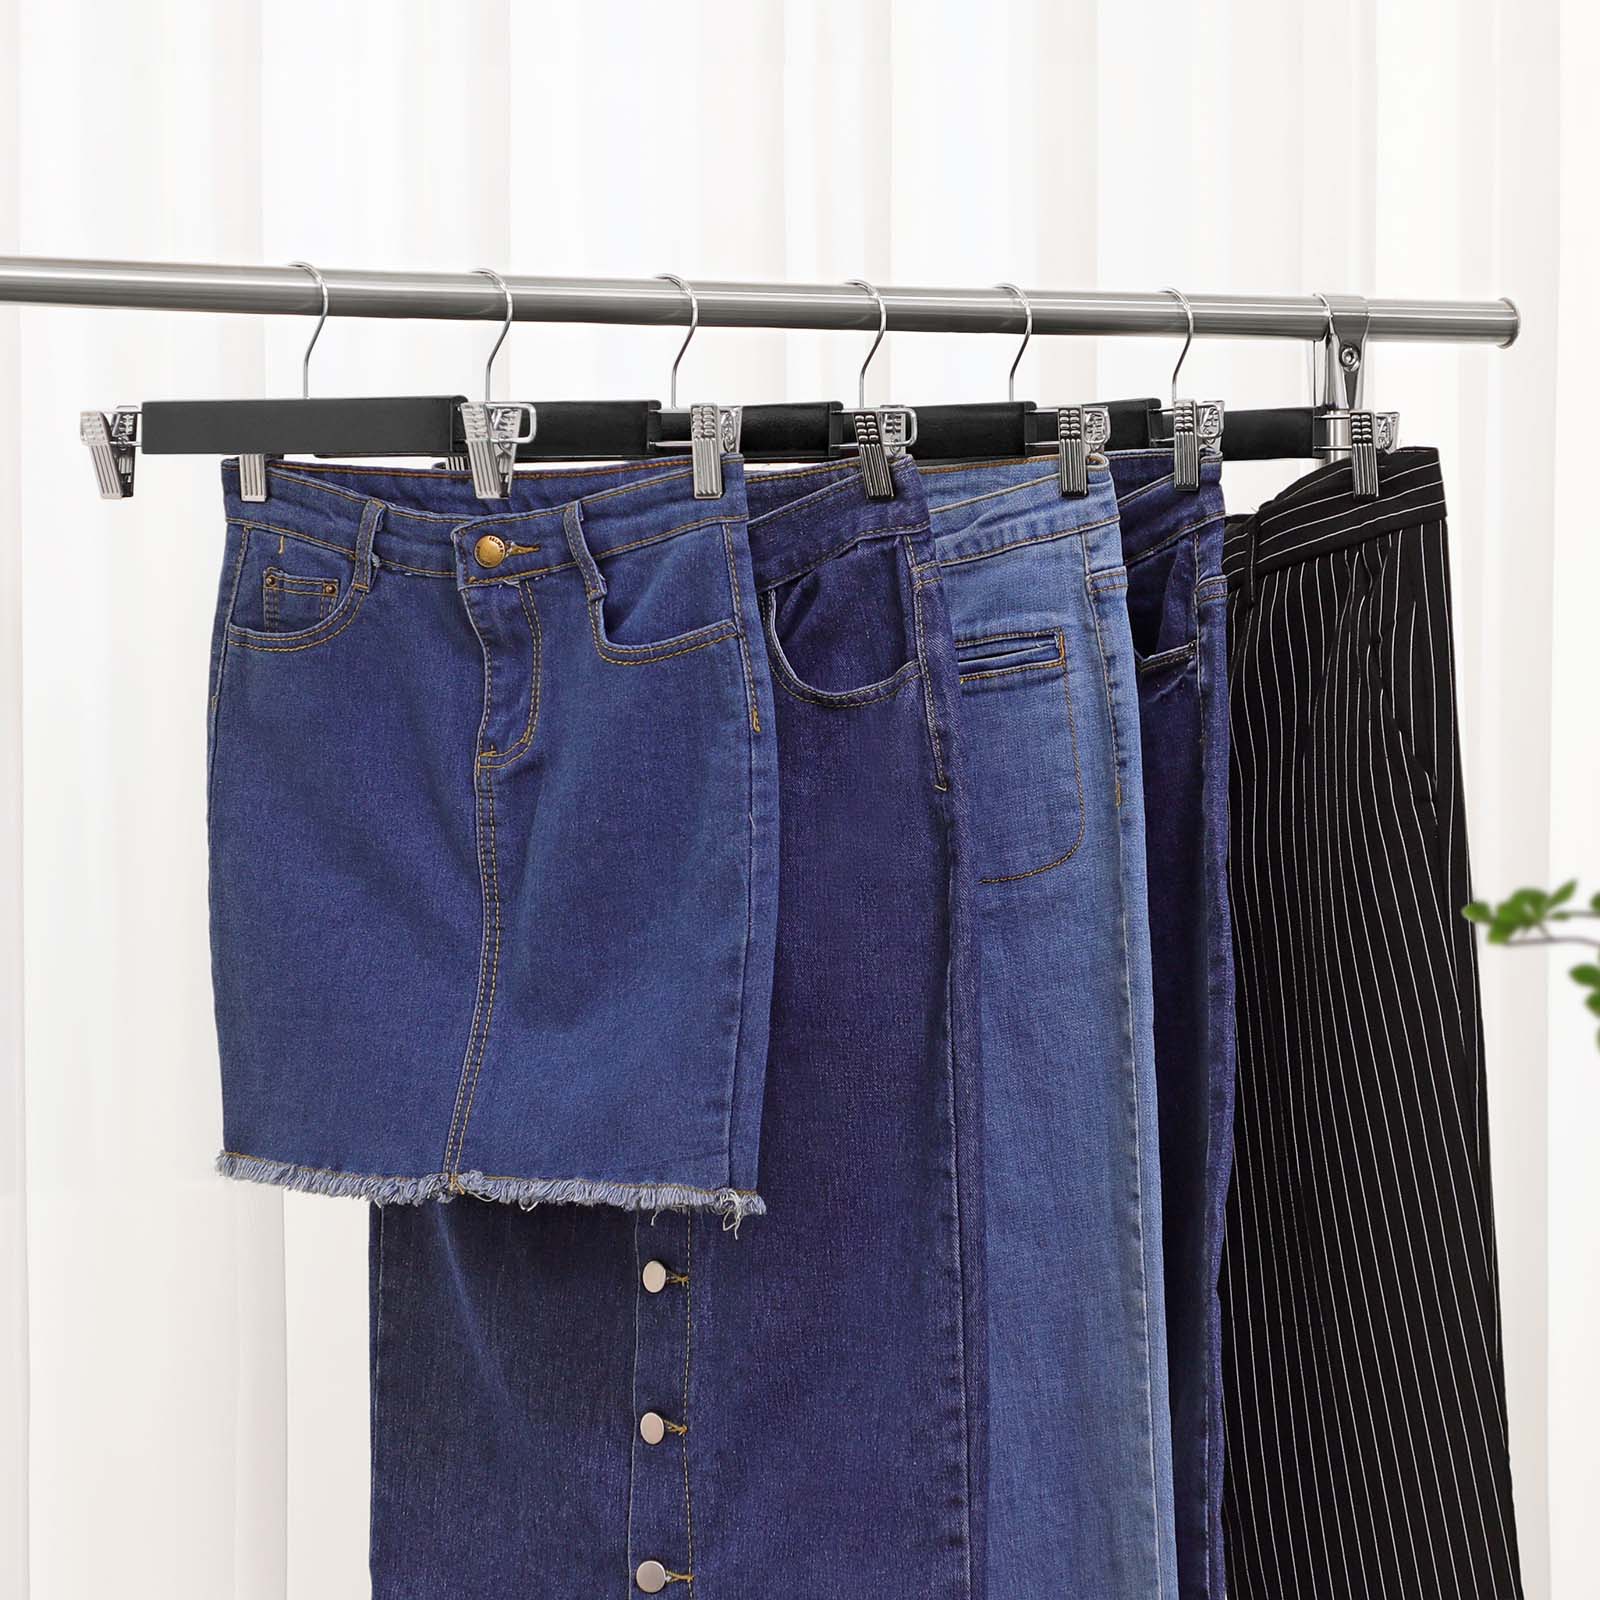 12 Pants Hangers Set - Pants Hangers | SONGMICS